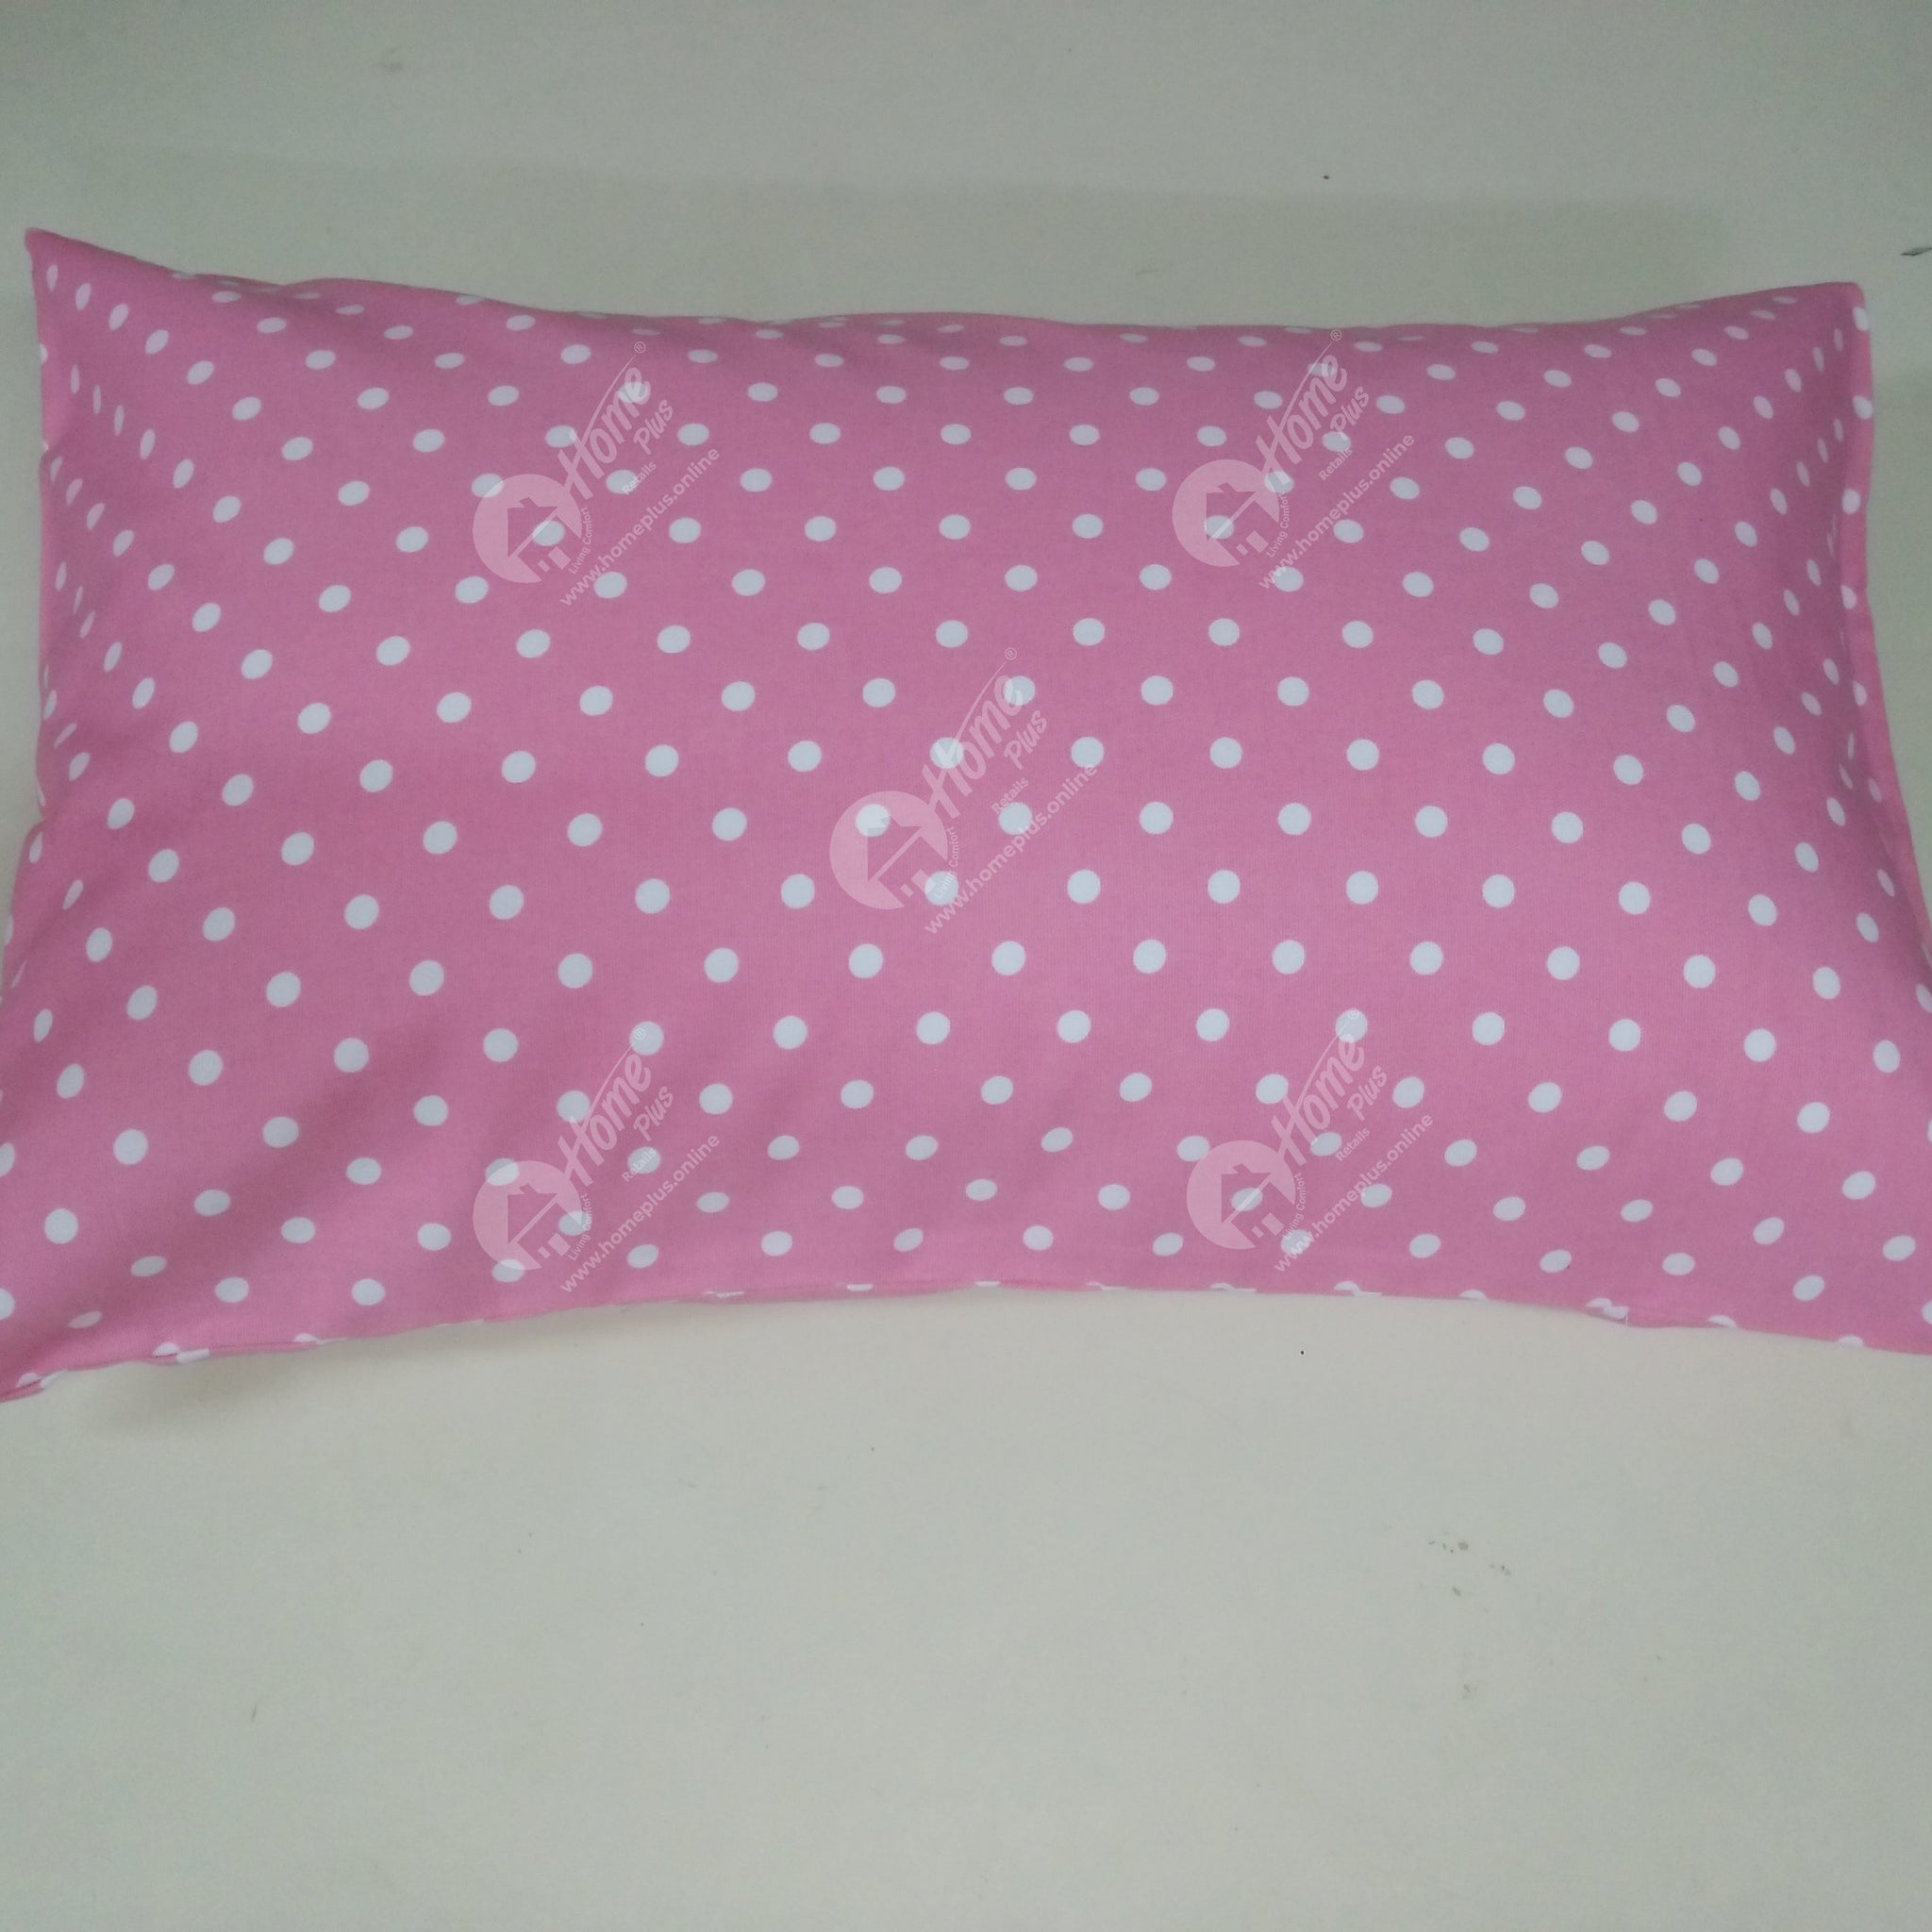 Pillow cover - Polka Dot Pink